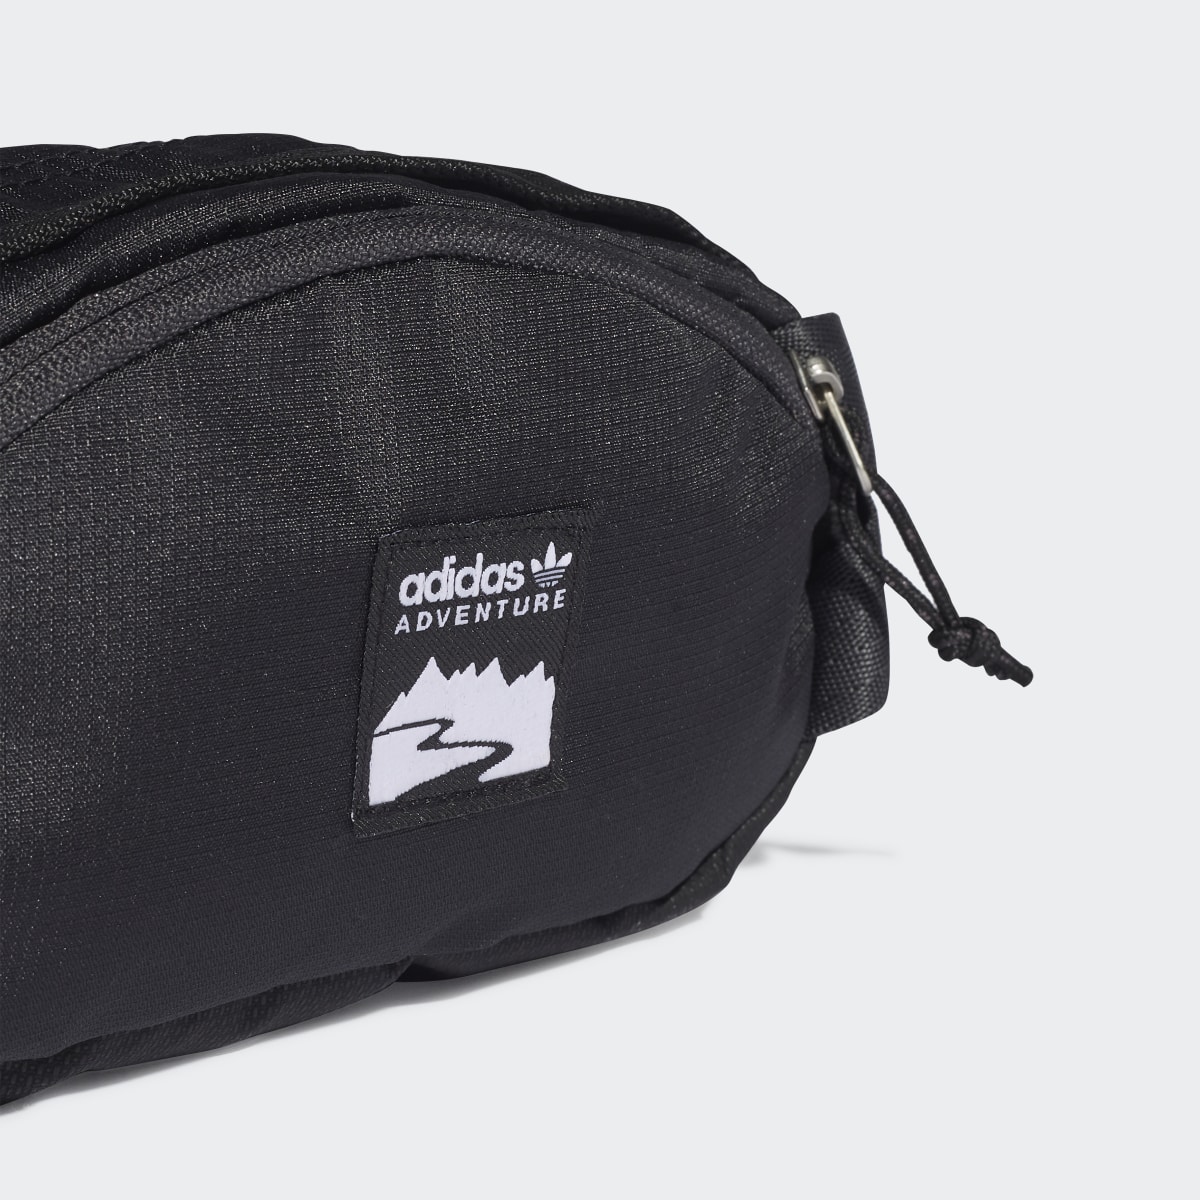 Adidas Adventure Waist Bag Small. 7